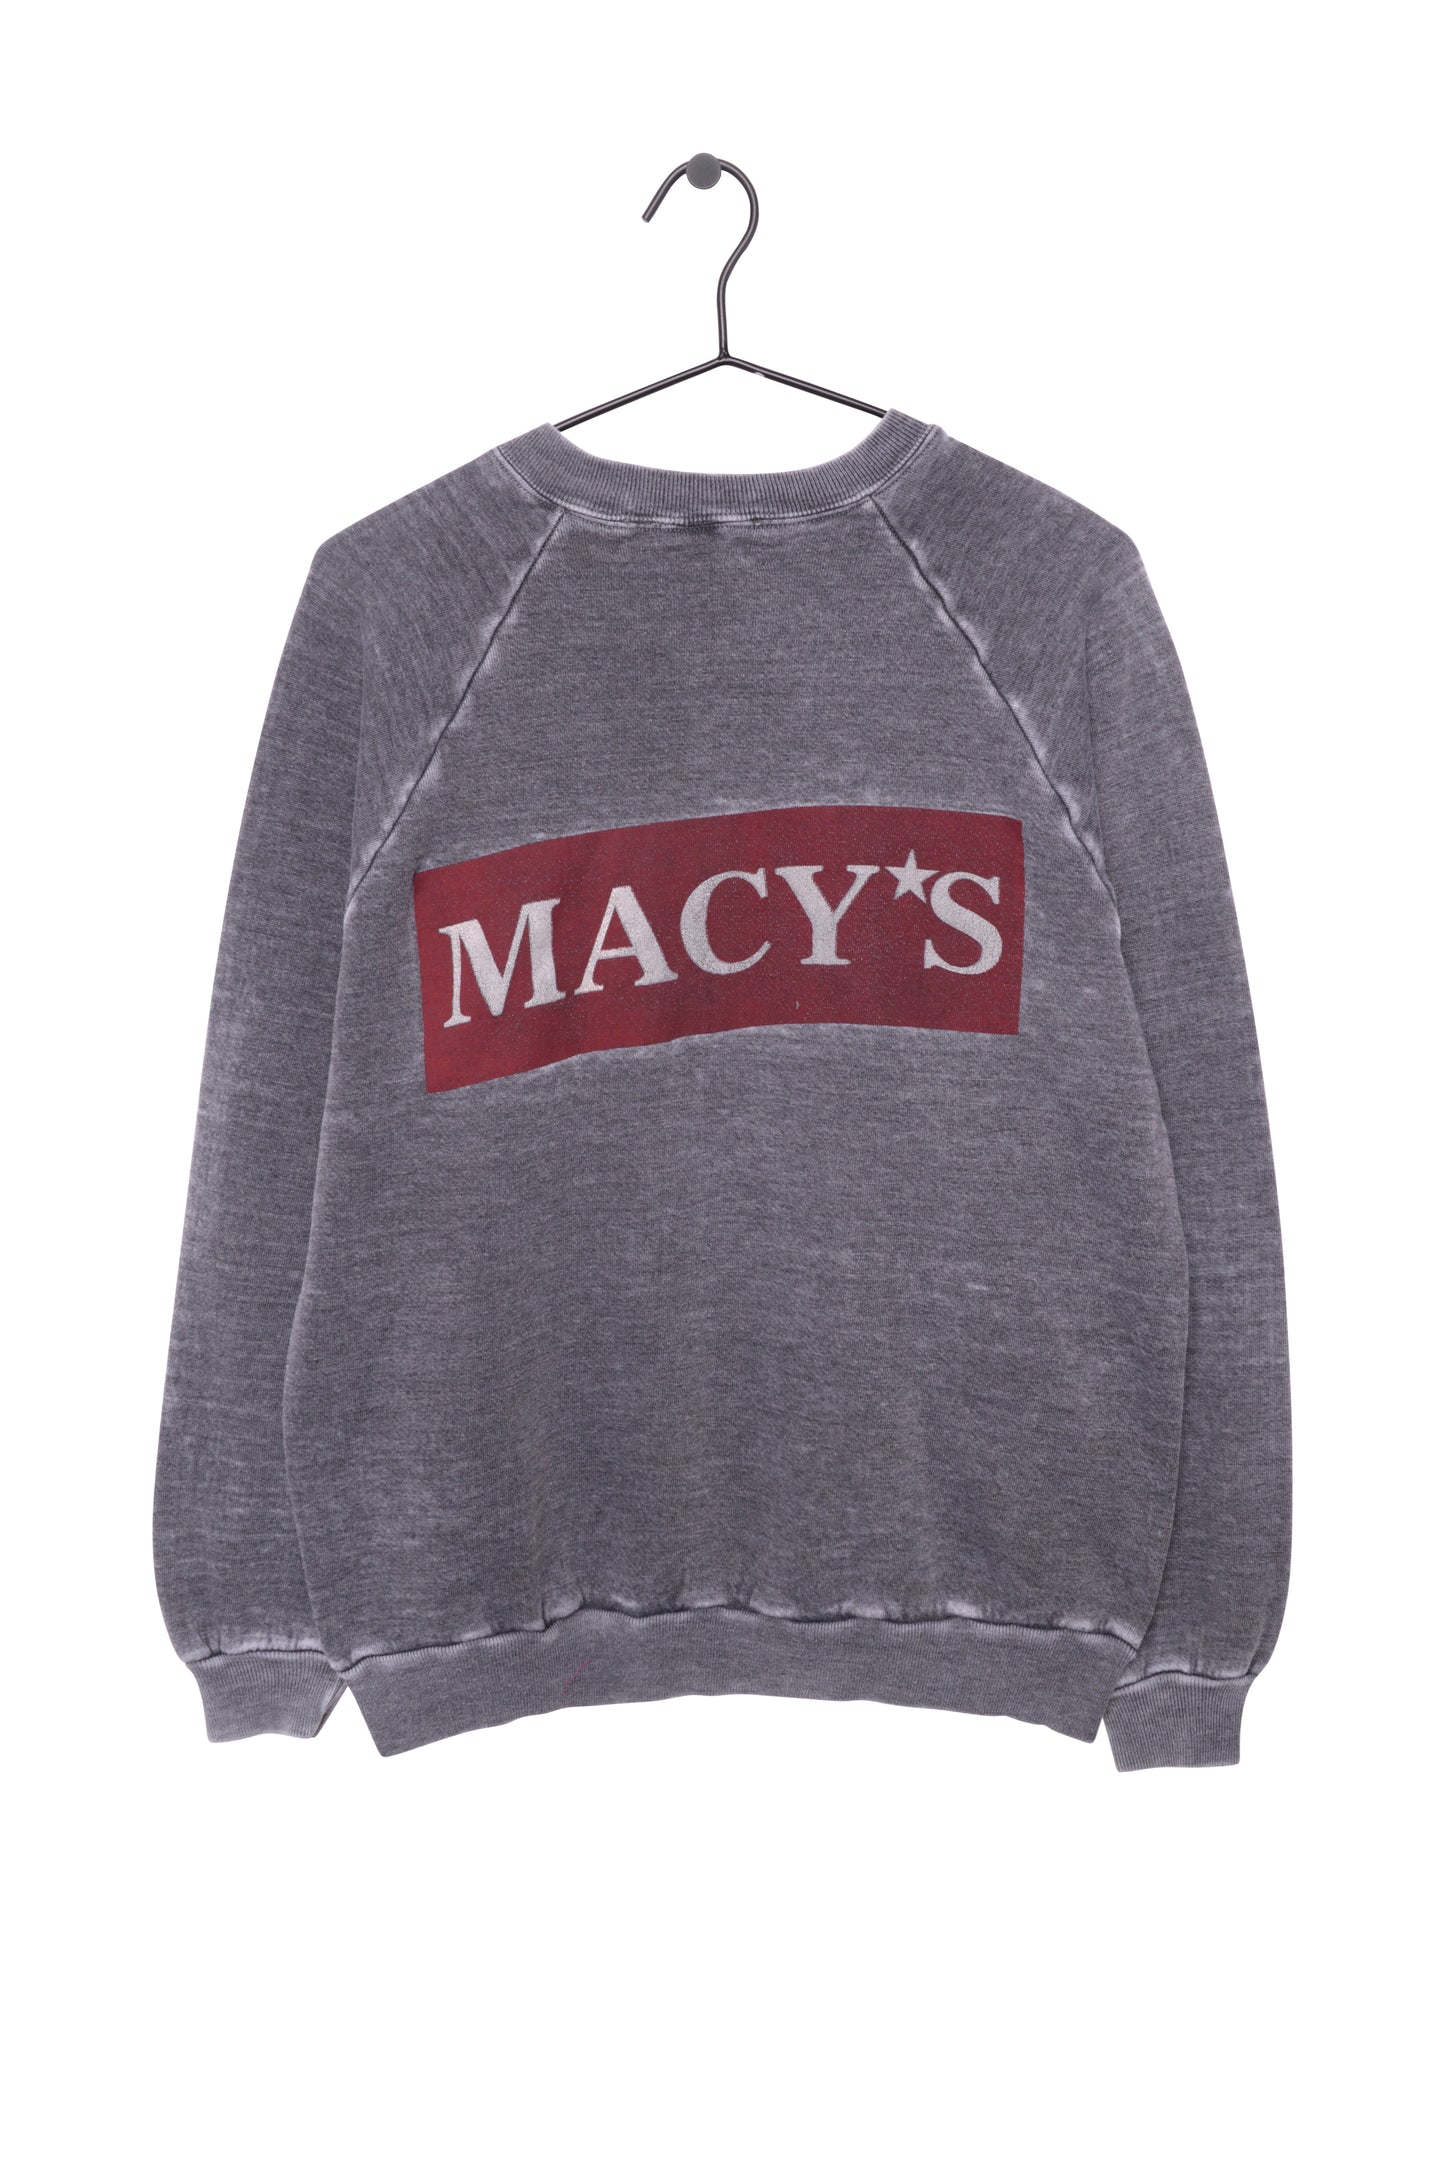 World's Largest Macy's Sweatshirt